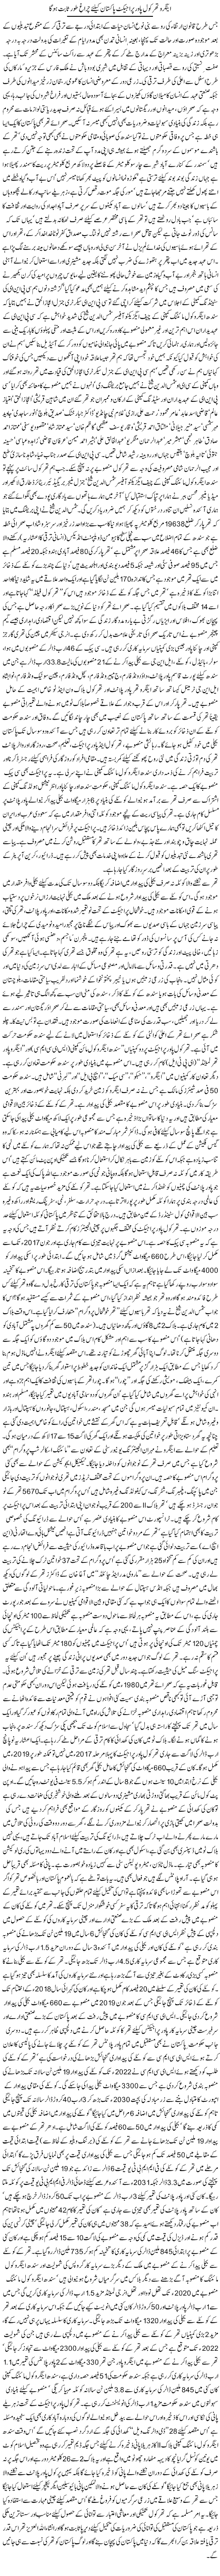 Engro Thar Coal Power Project Pakistan Ke Liye Chiraag Toor Saabit Hoga | Rehmat Ali Razi | Daily Urdu Columns